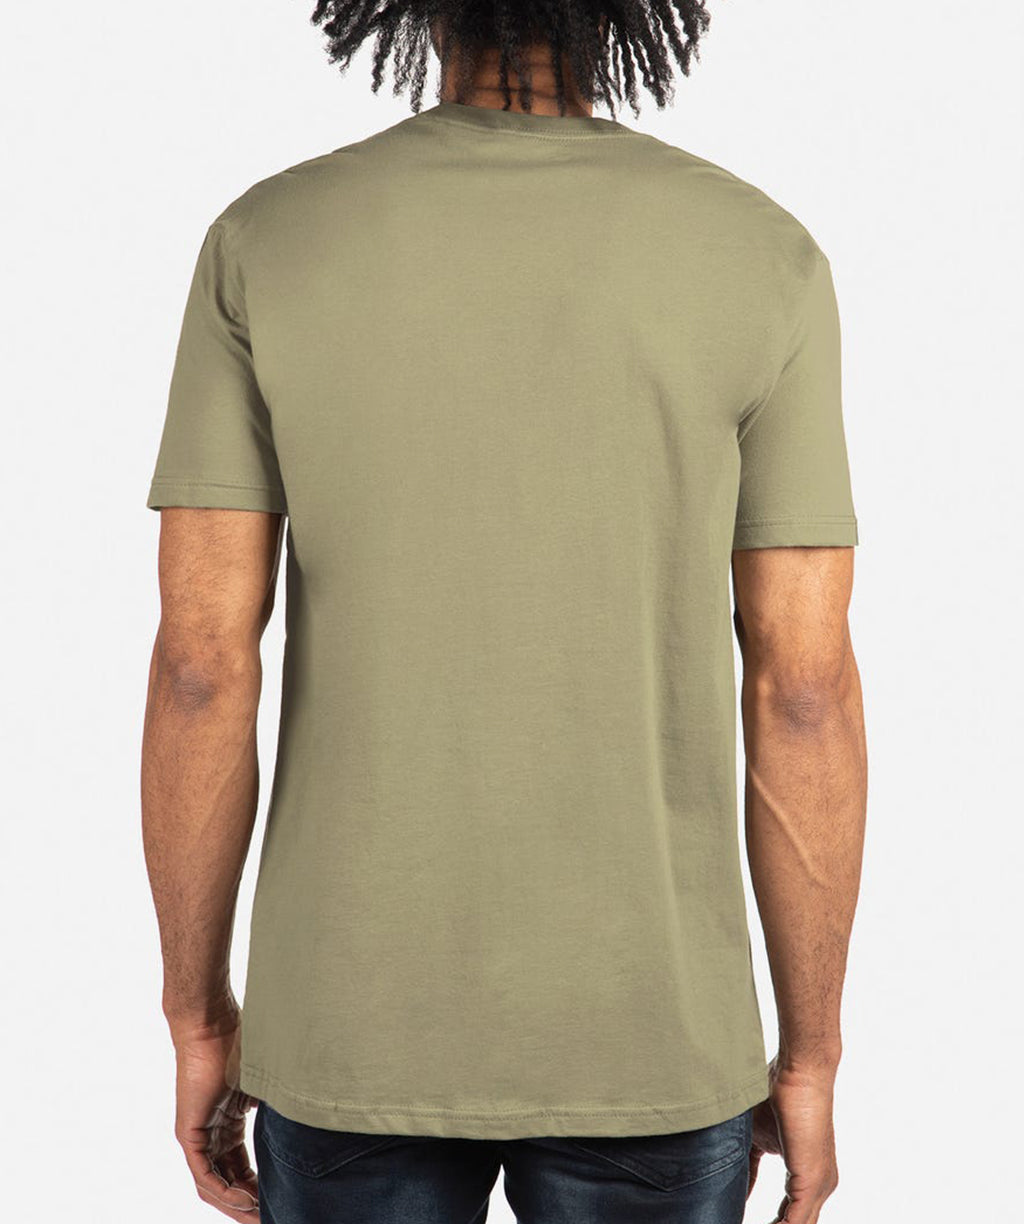 60+ // Next Level Premium Soft Tshirts